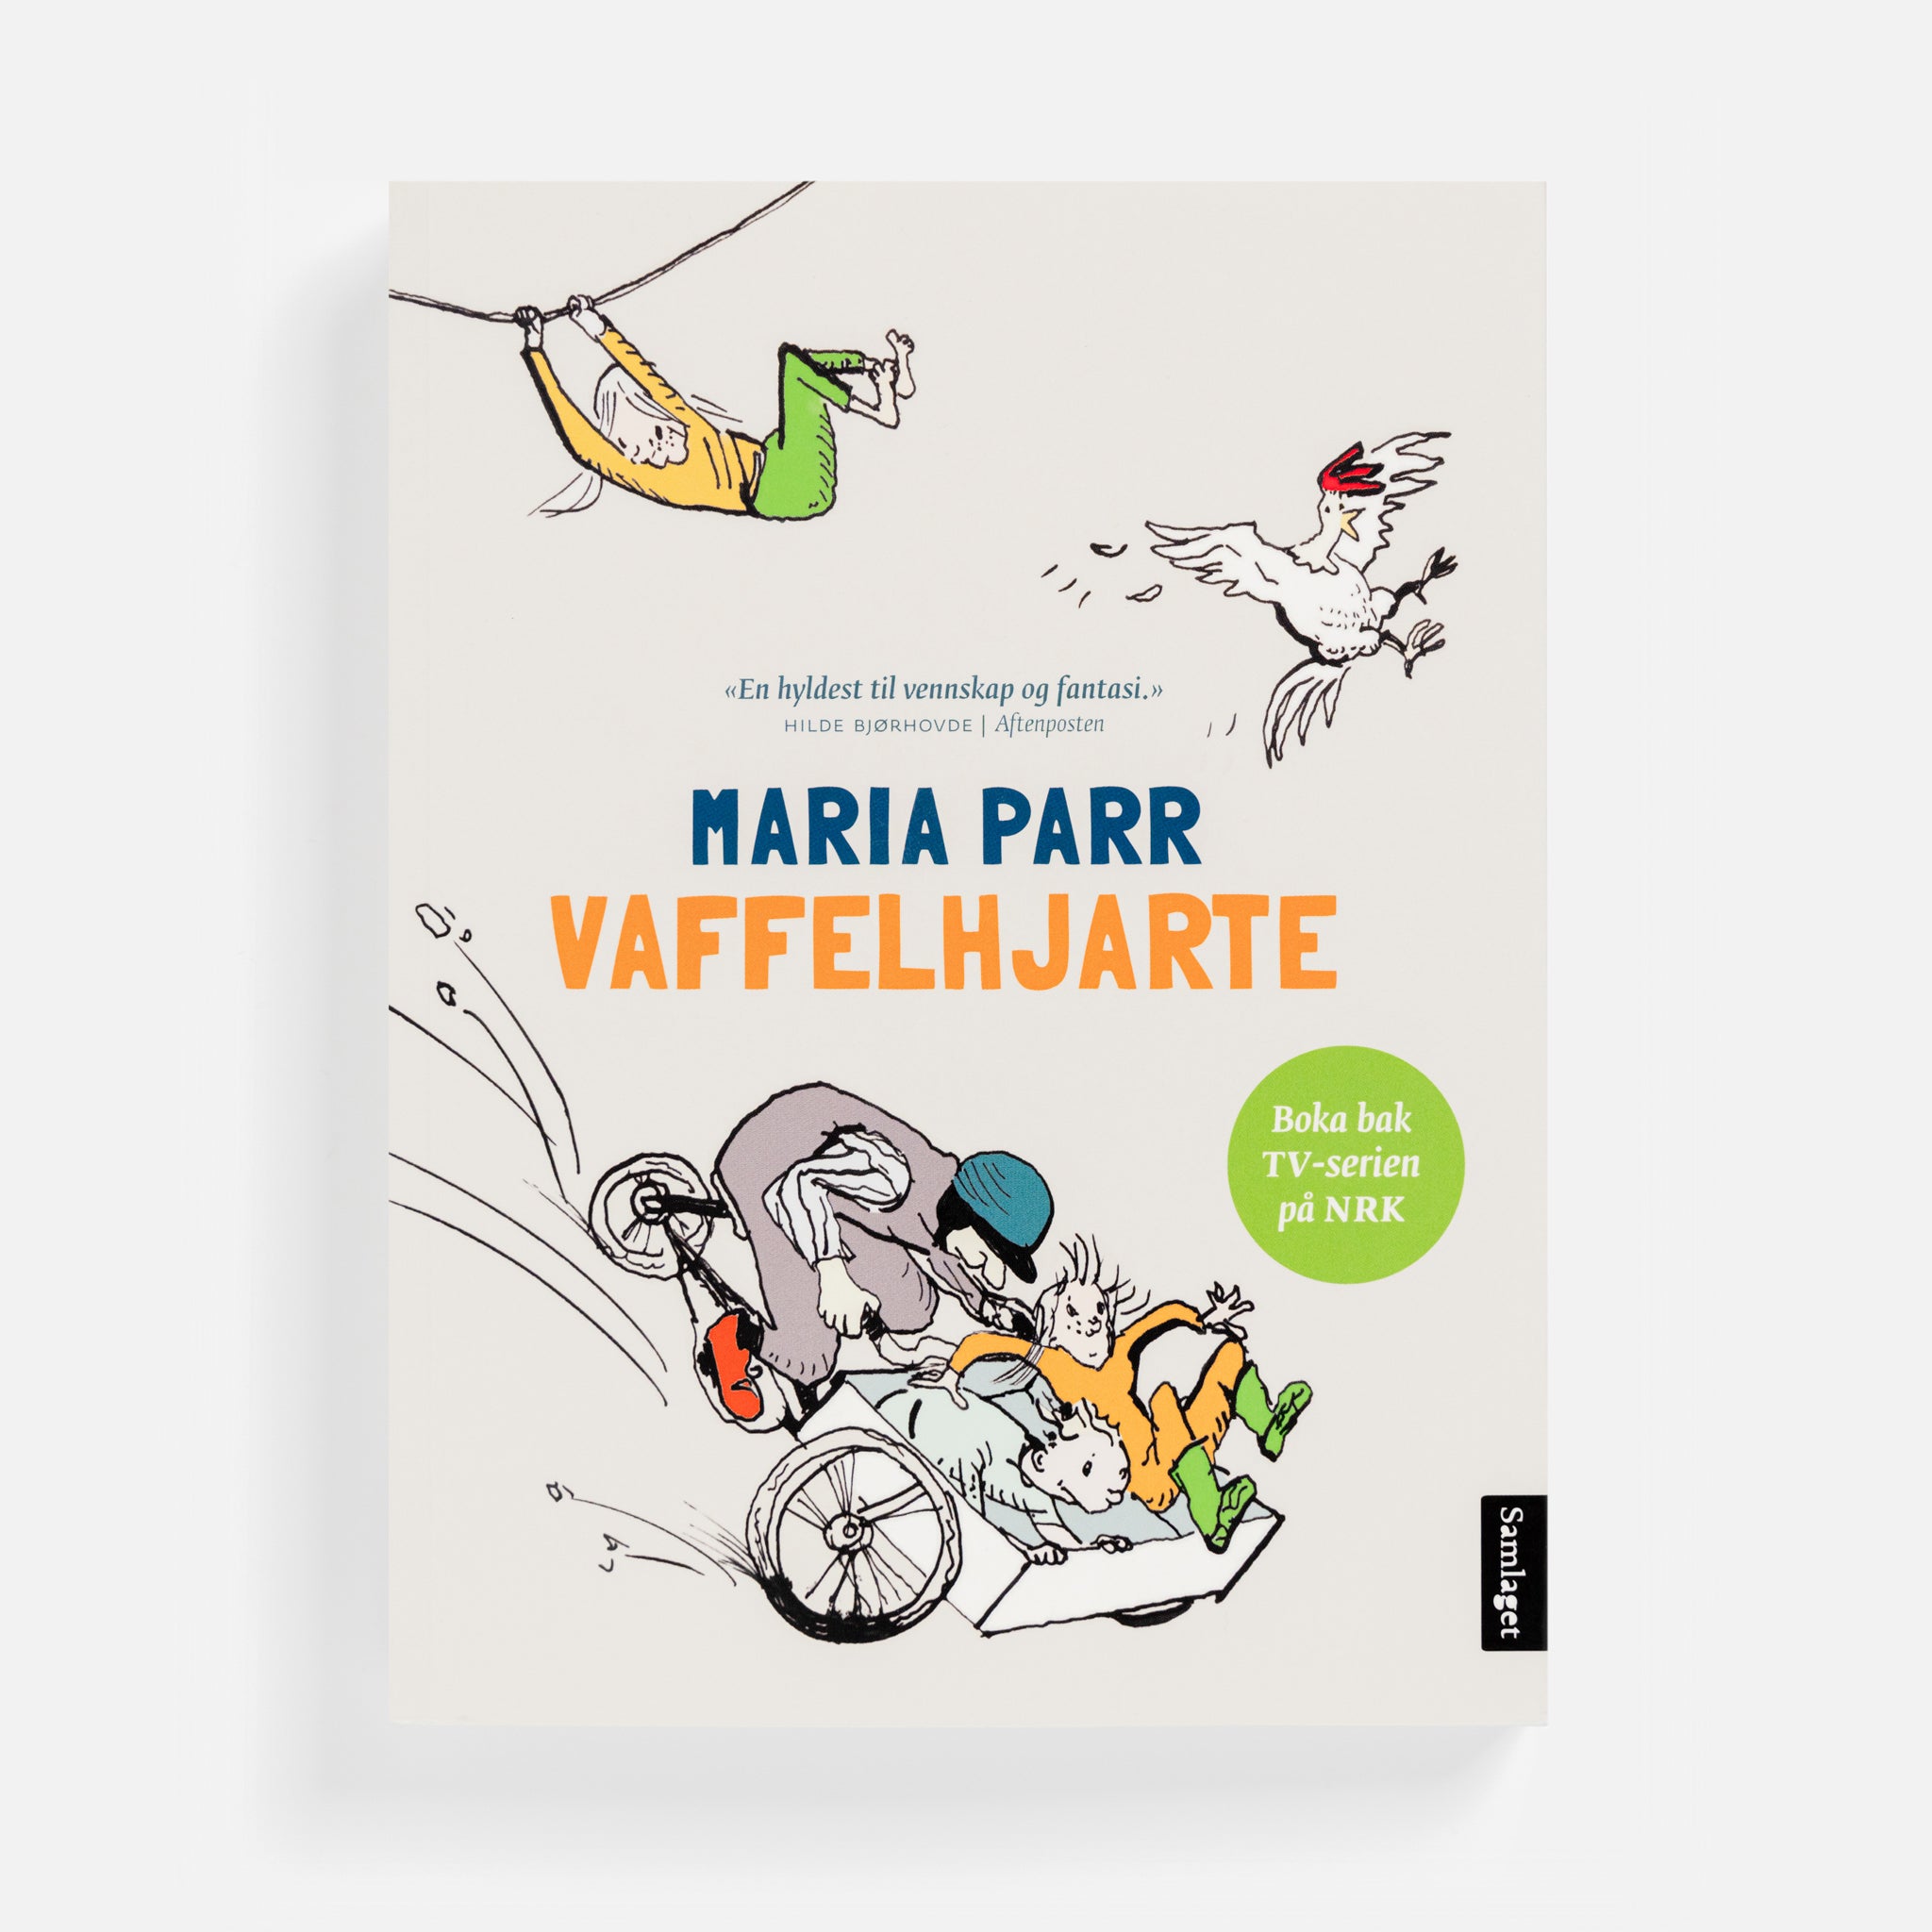 Vaffelhjarte by Maria Parr